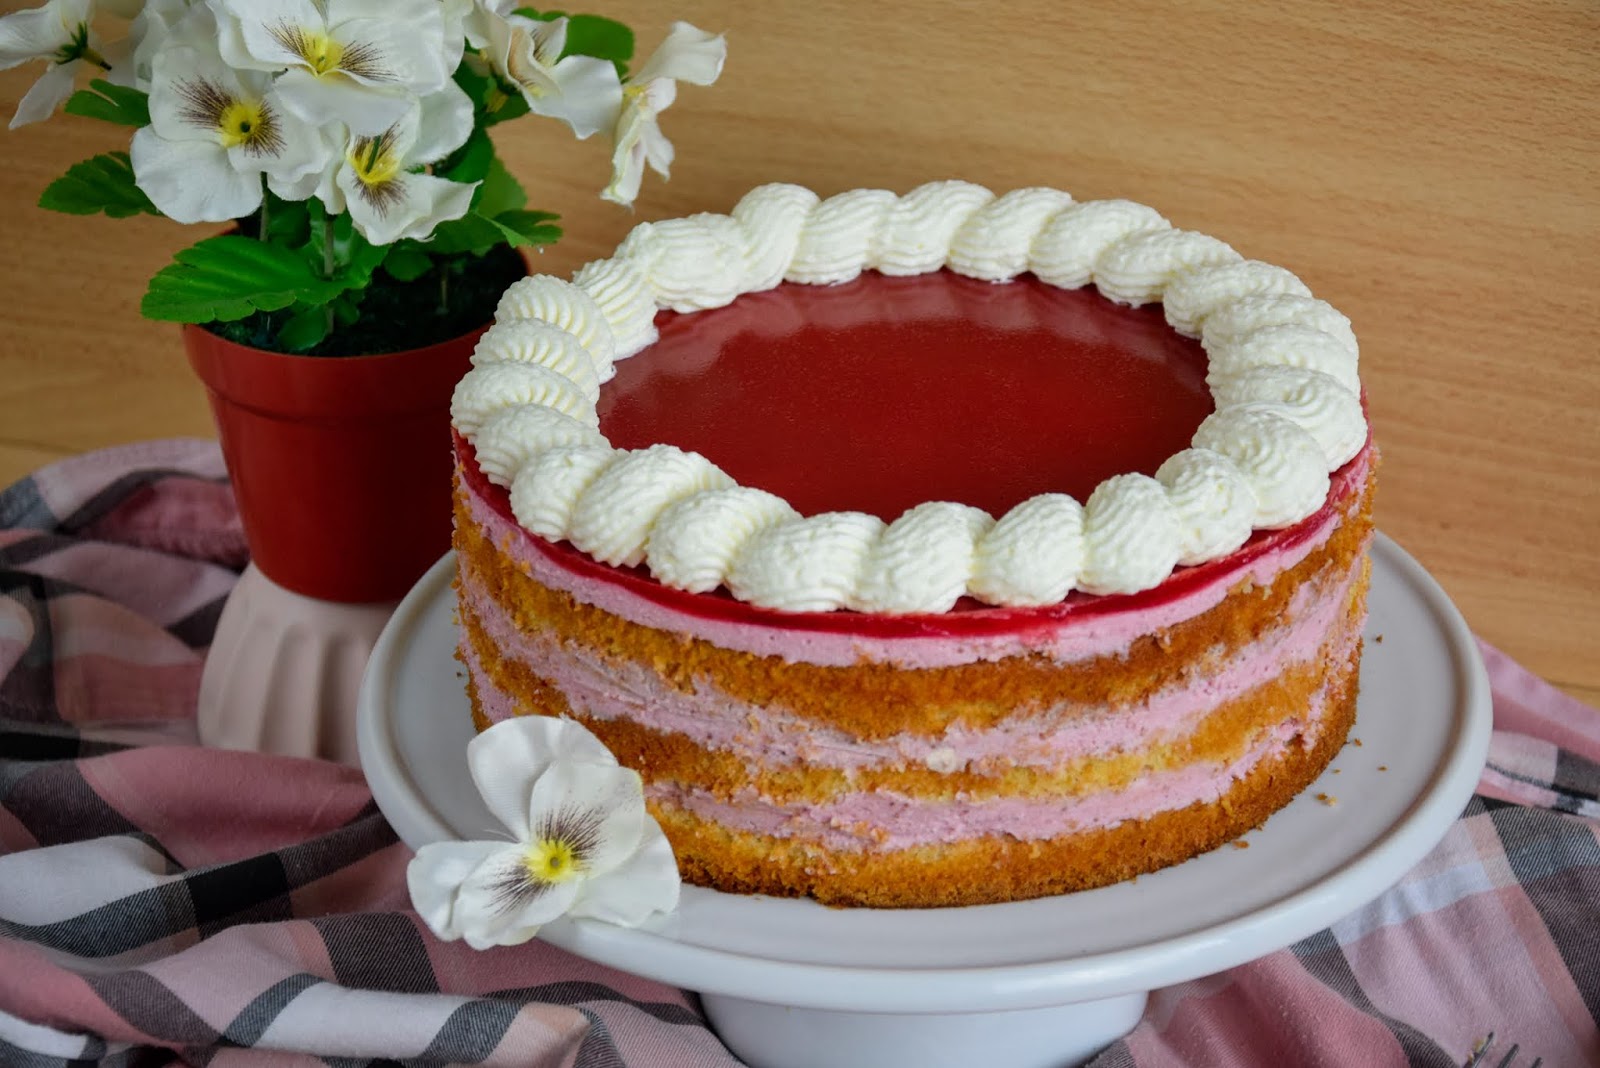 kiras_bakery: Erdbeer Pfirsich Torte/ Muttertagstorte